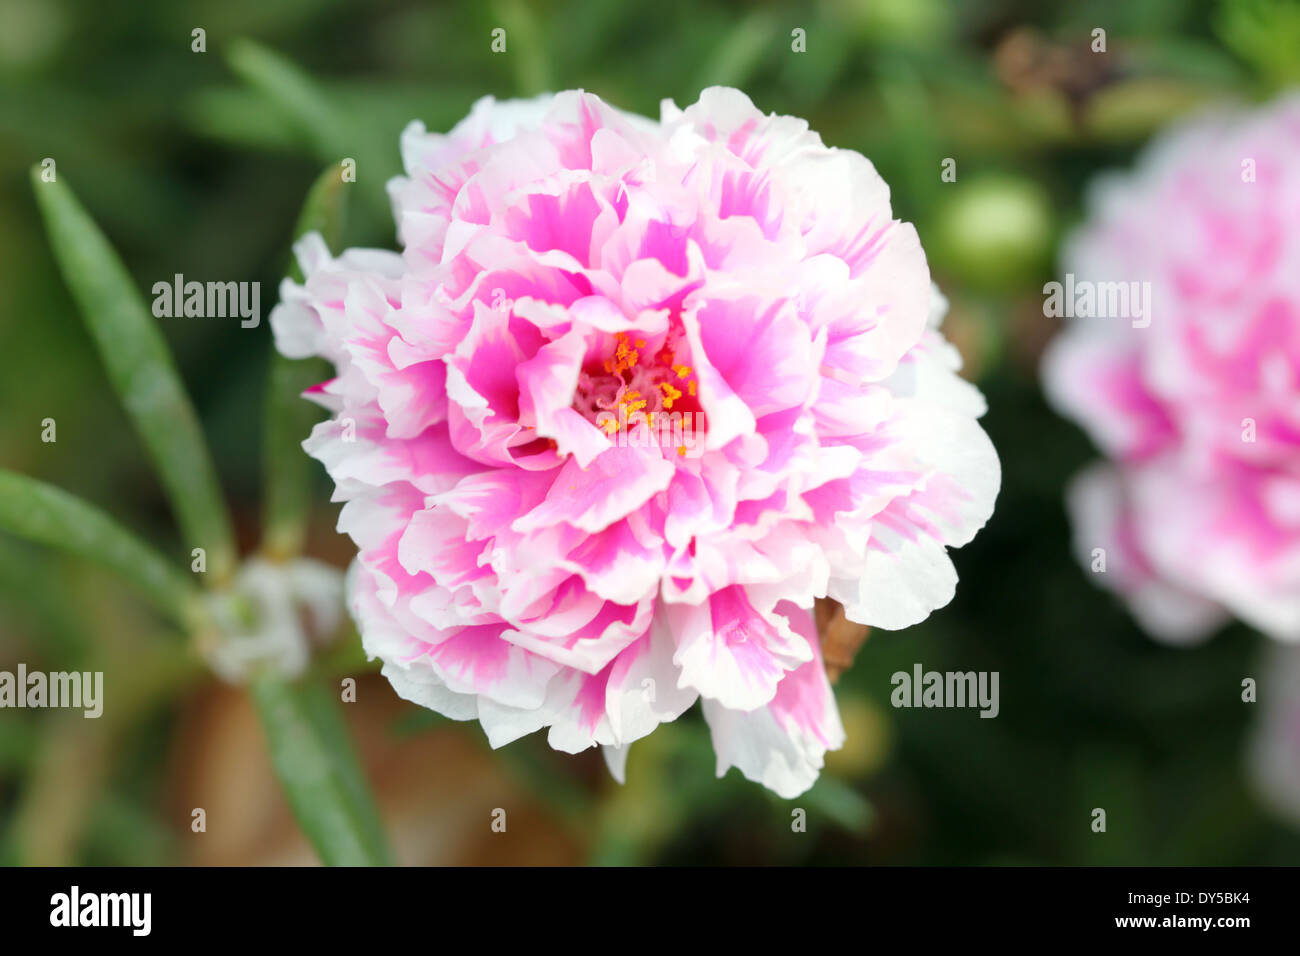 Pink Common Purslane flower in the garden. Stock Photo